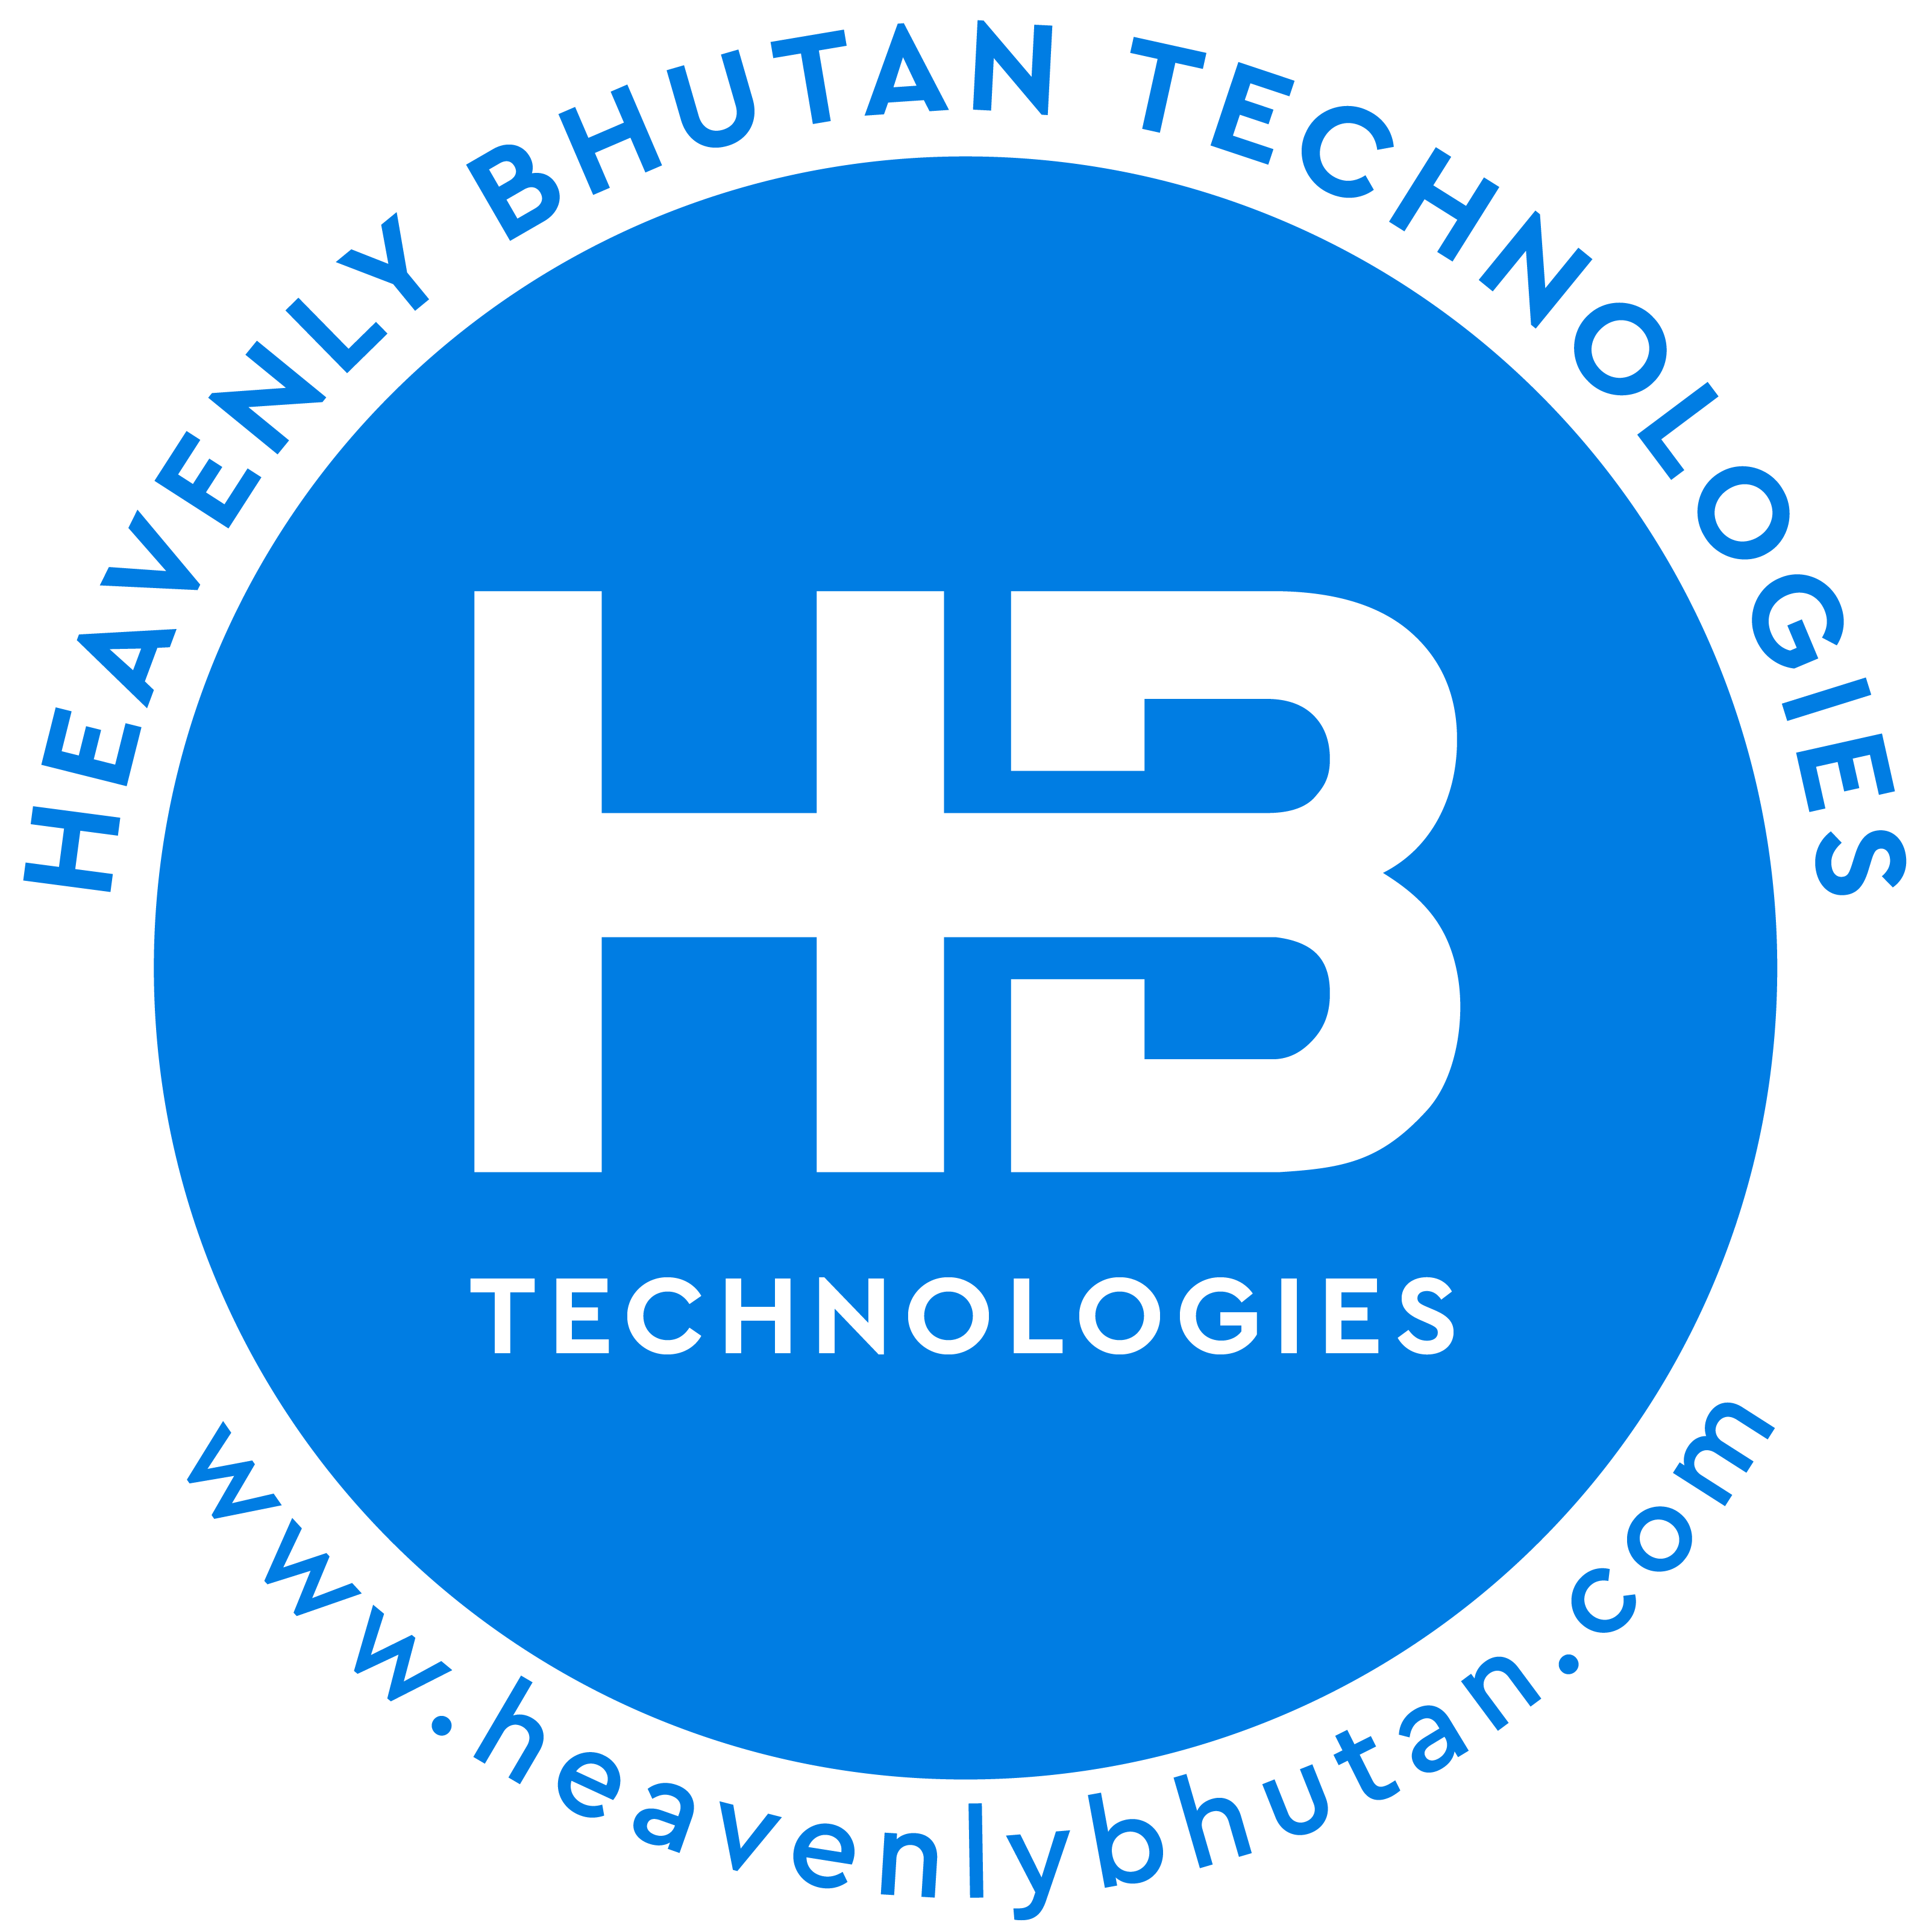 Heavenly Bhutan Technologies